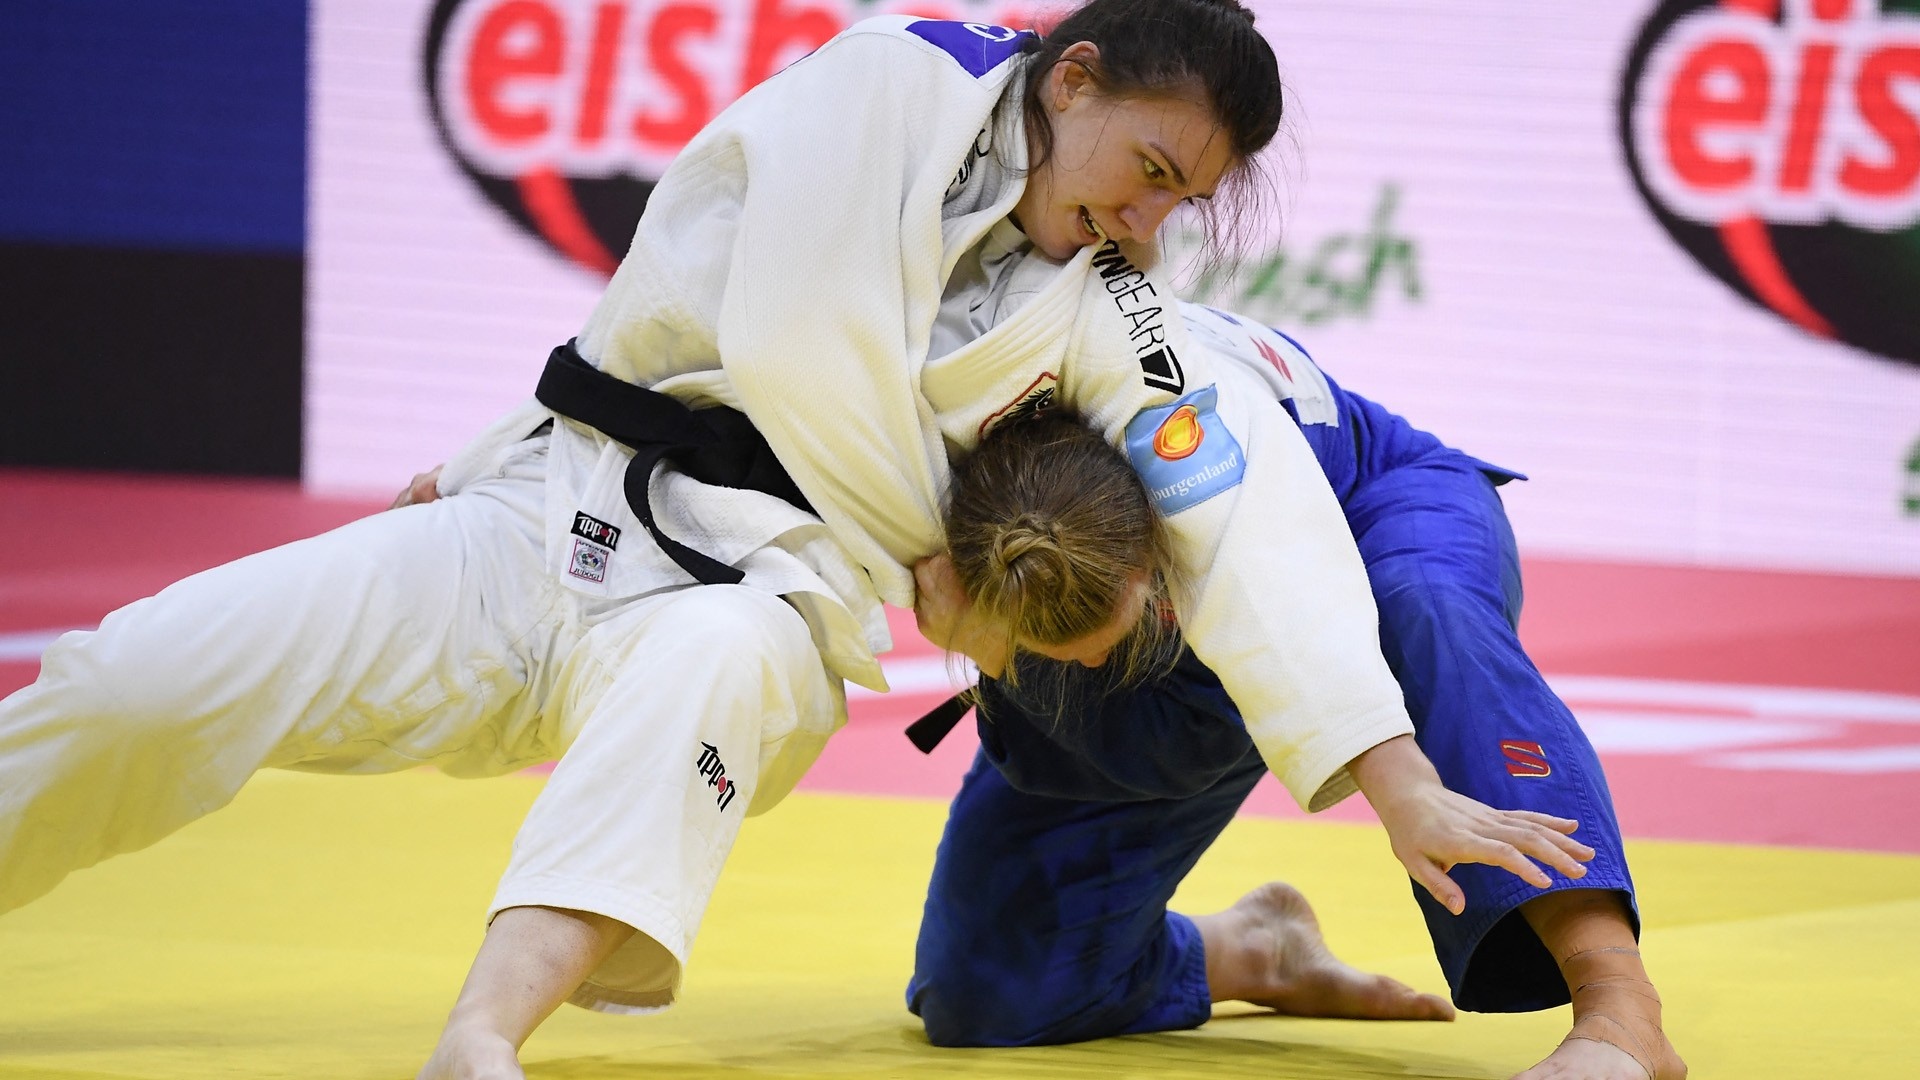 Judo: Michaela Polleres, An Austrian judoka, The 2020 Summer Olympics silver medalist. 1920x1080 Full HD Wallpaper.